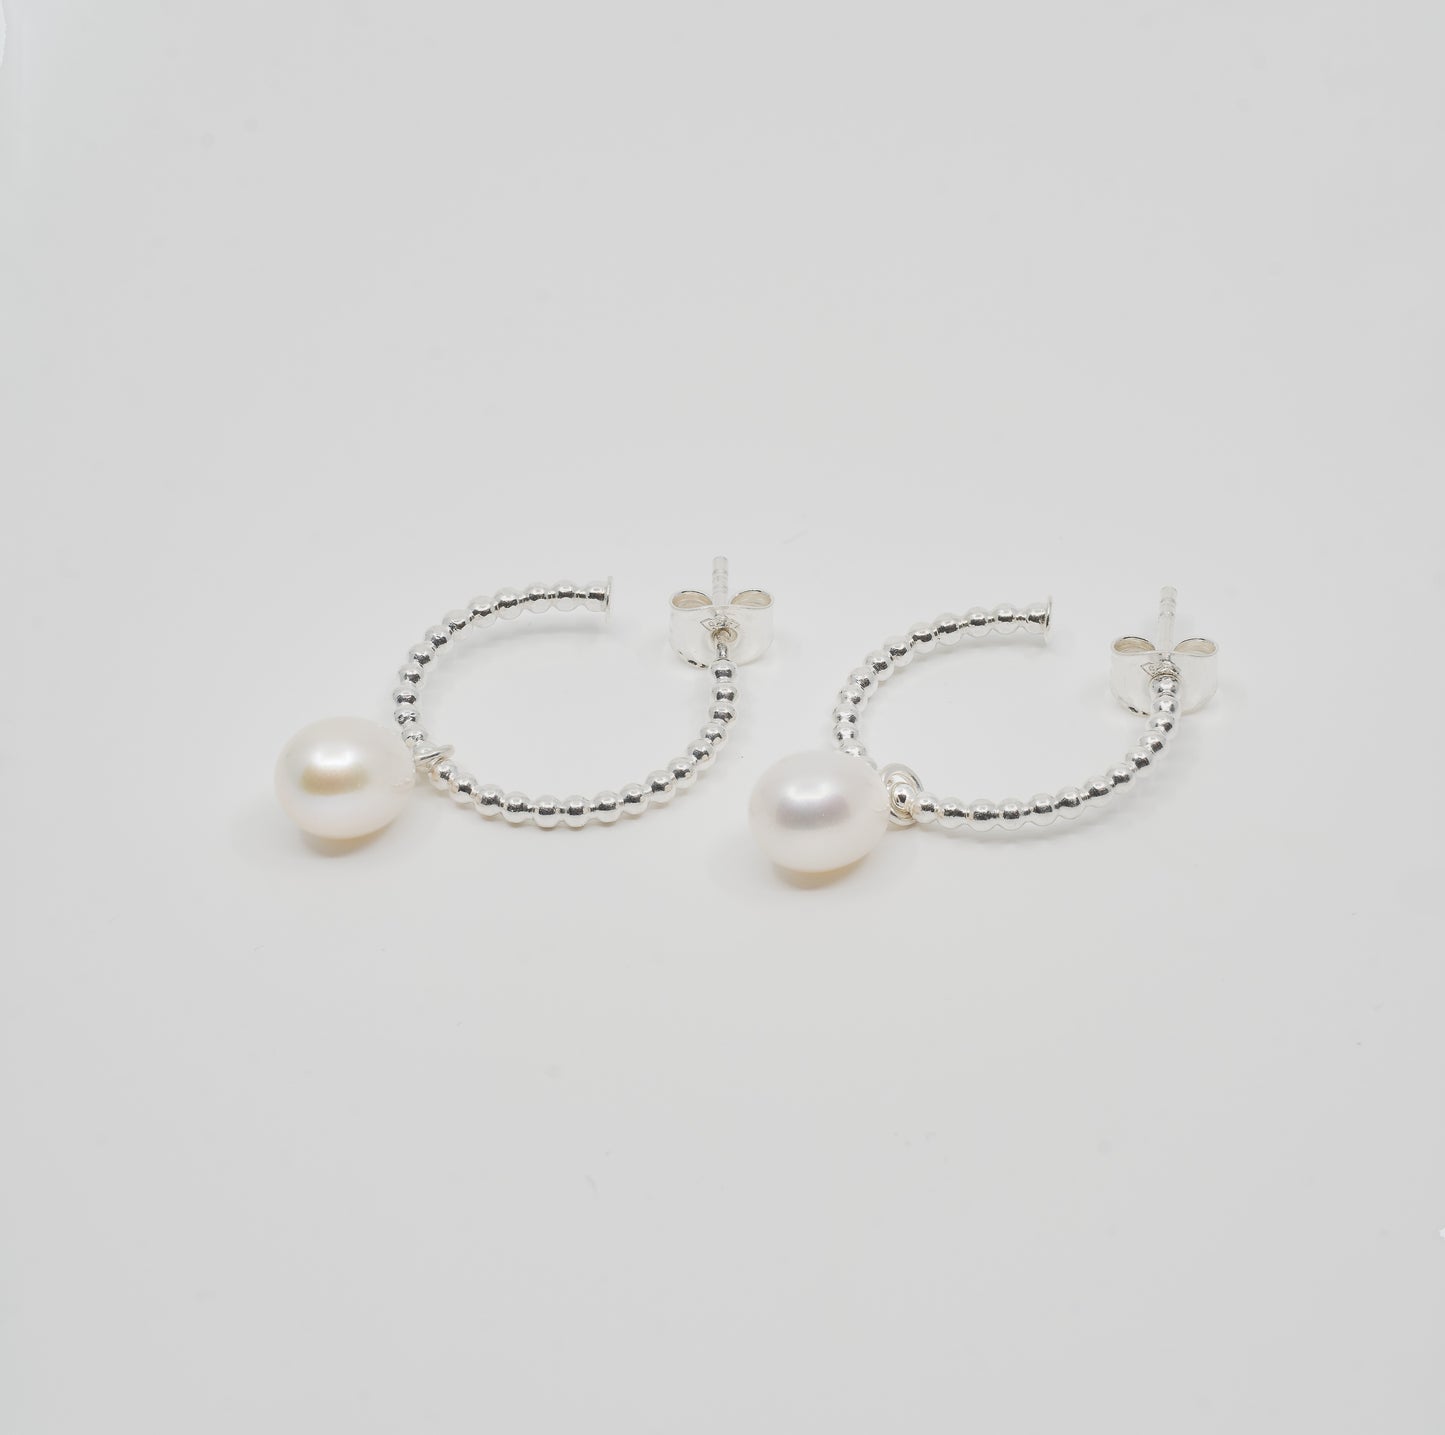 Drops of colour - earrings silver